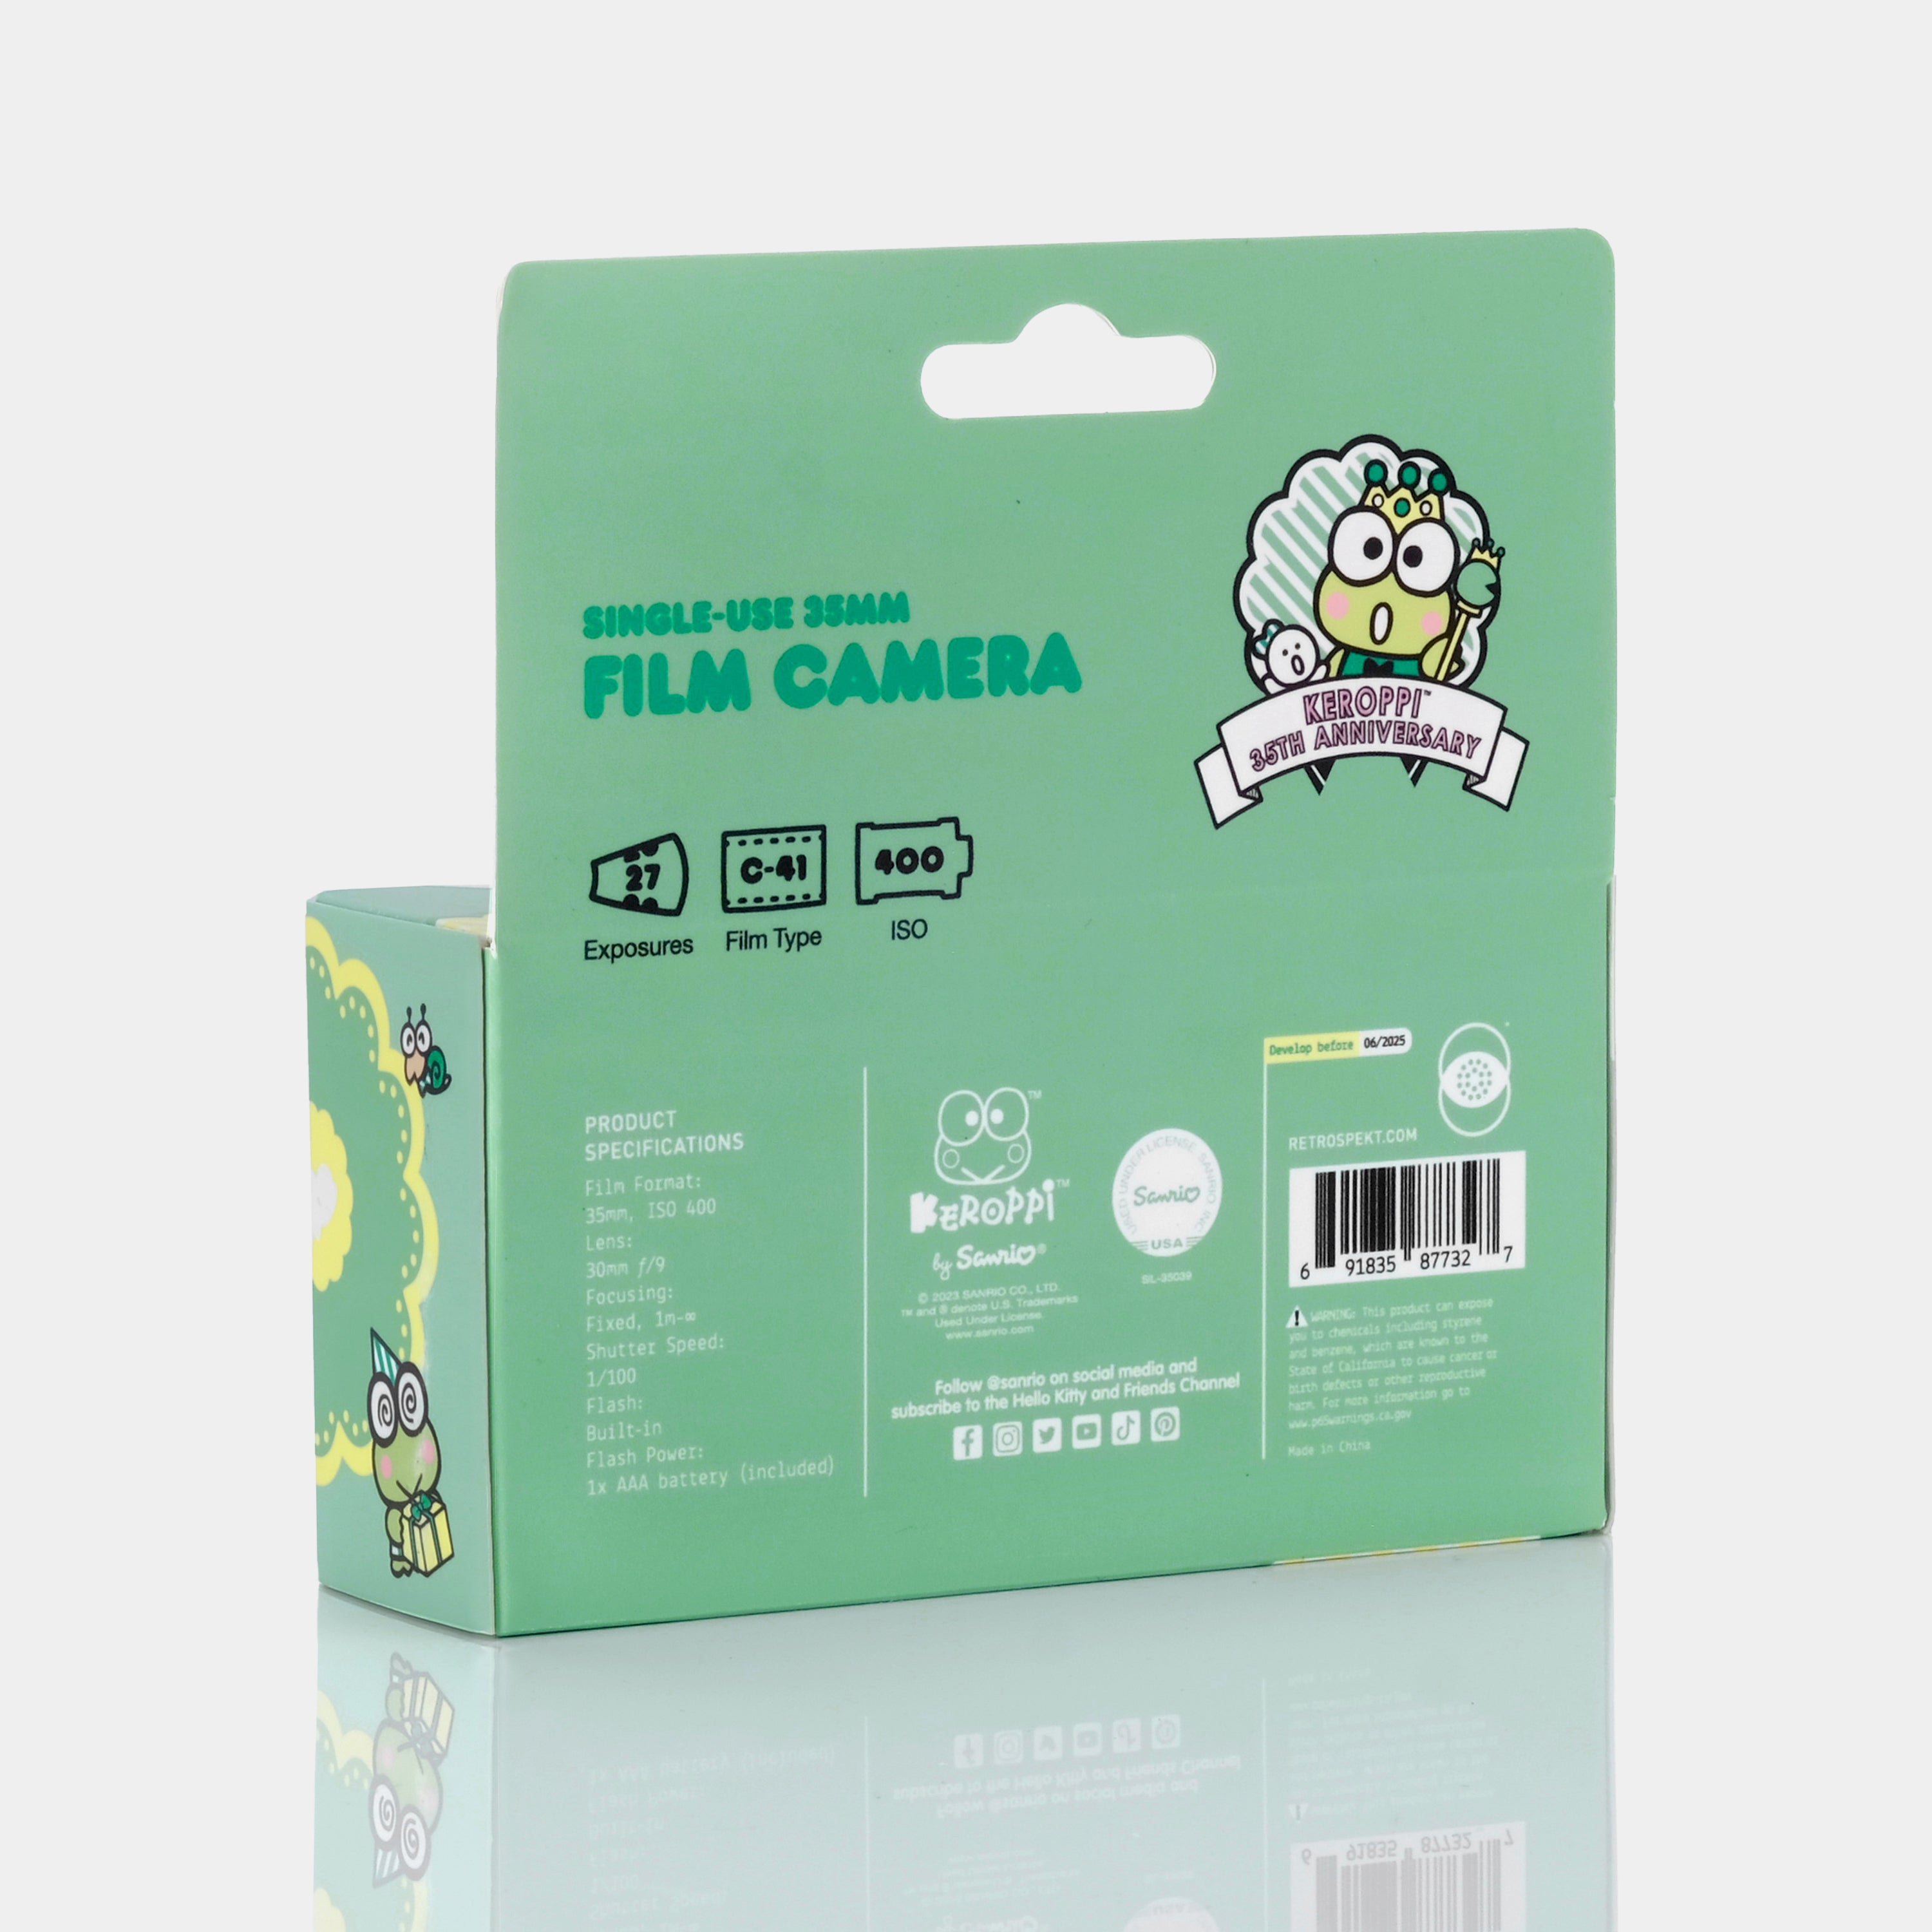 Keroppi Single-Use 35mm Film Camera with Film (27 Exposures)